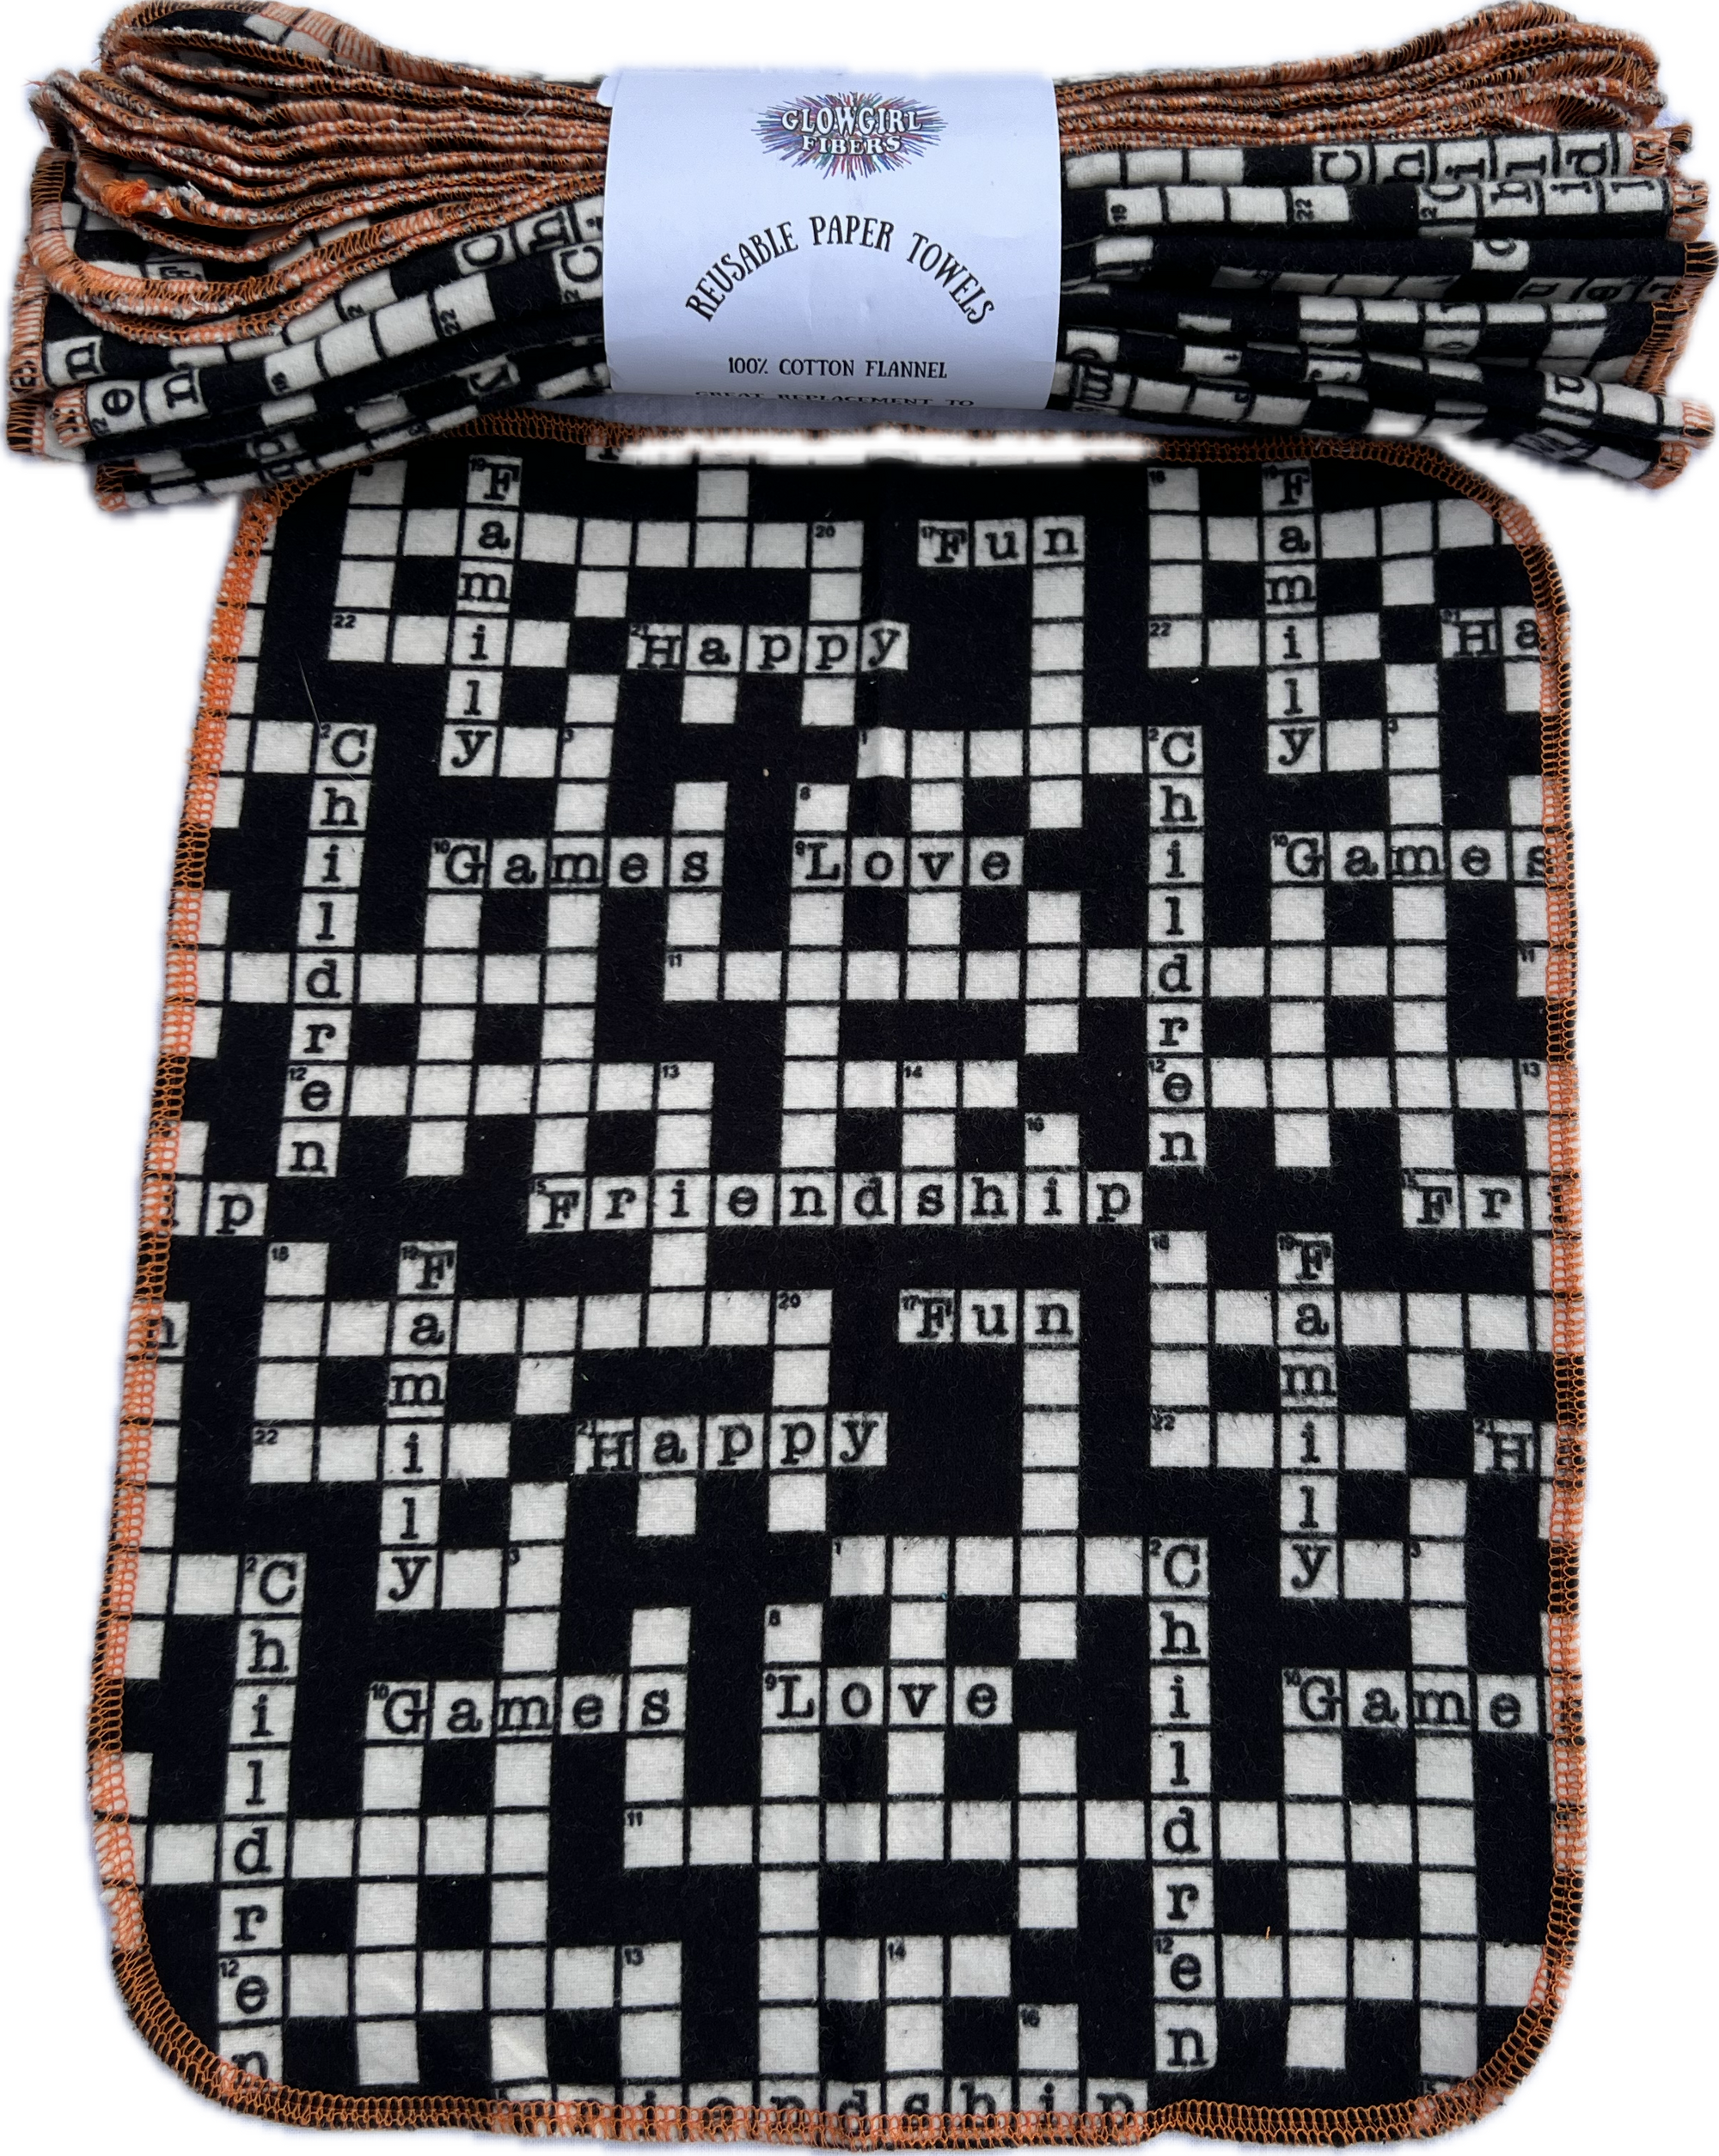 Non Paper Towels crossword puzzle- Large 10x12